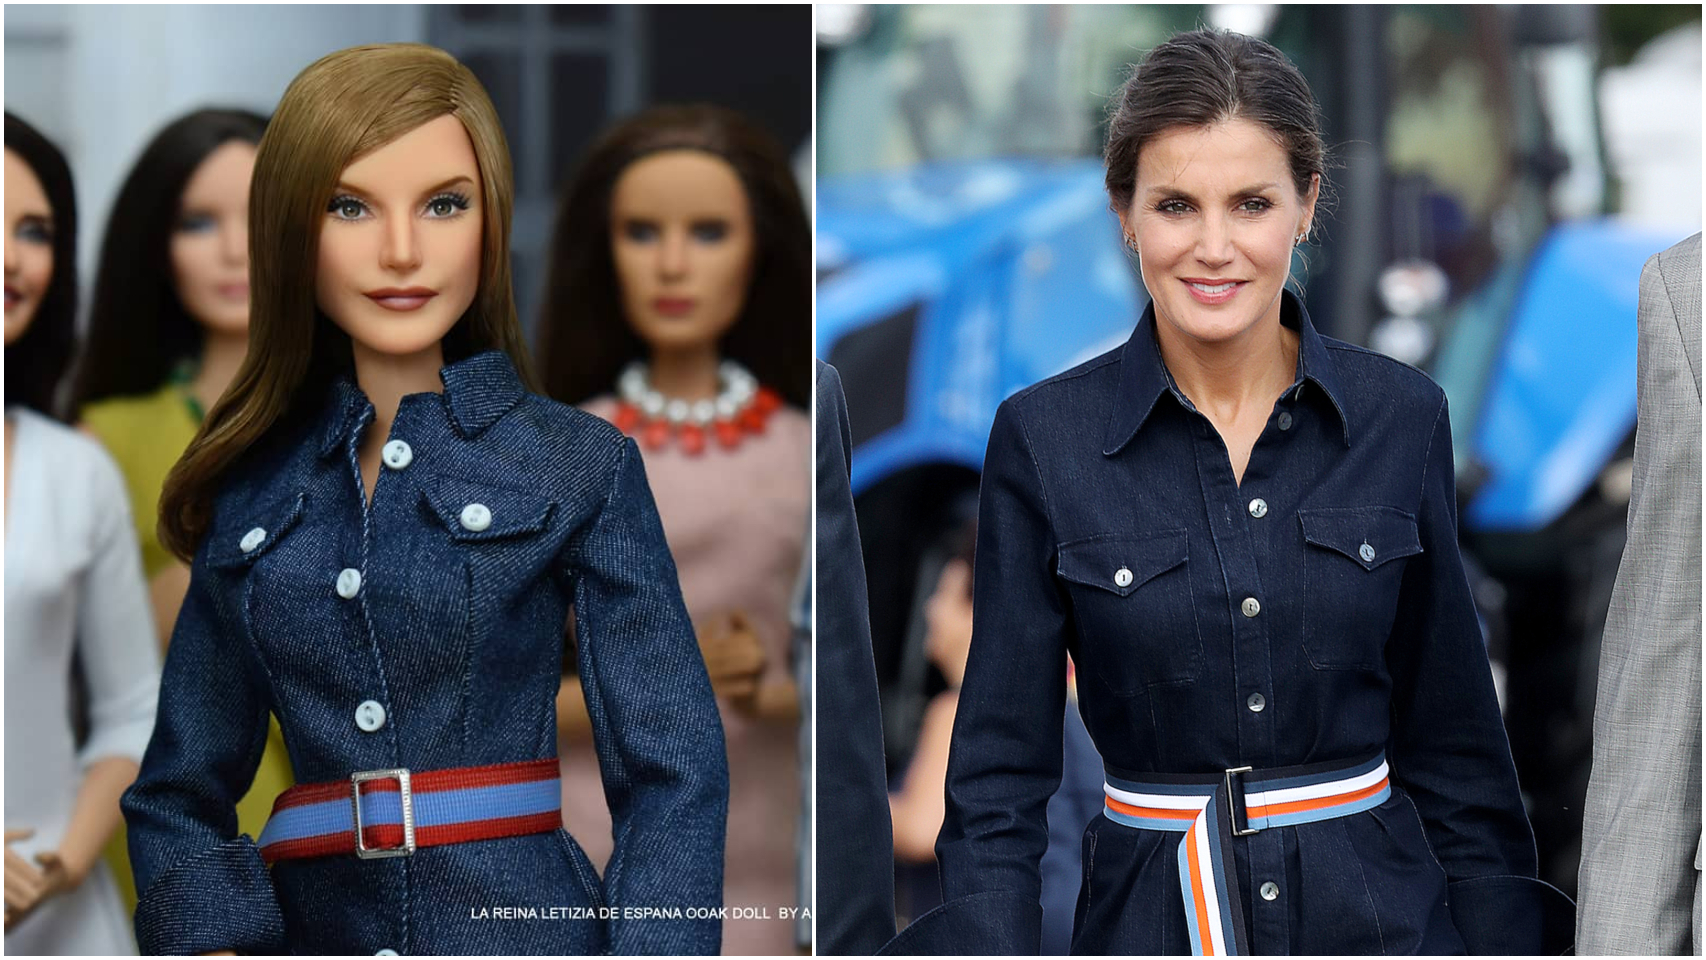 La reina Letizia tiene su propia Barbie.